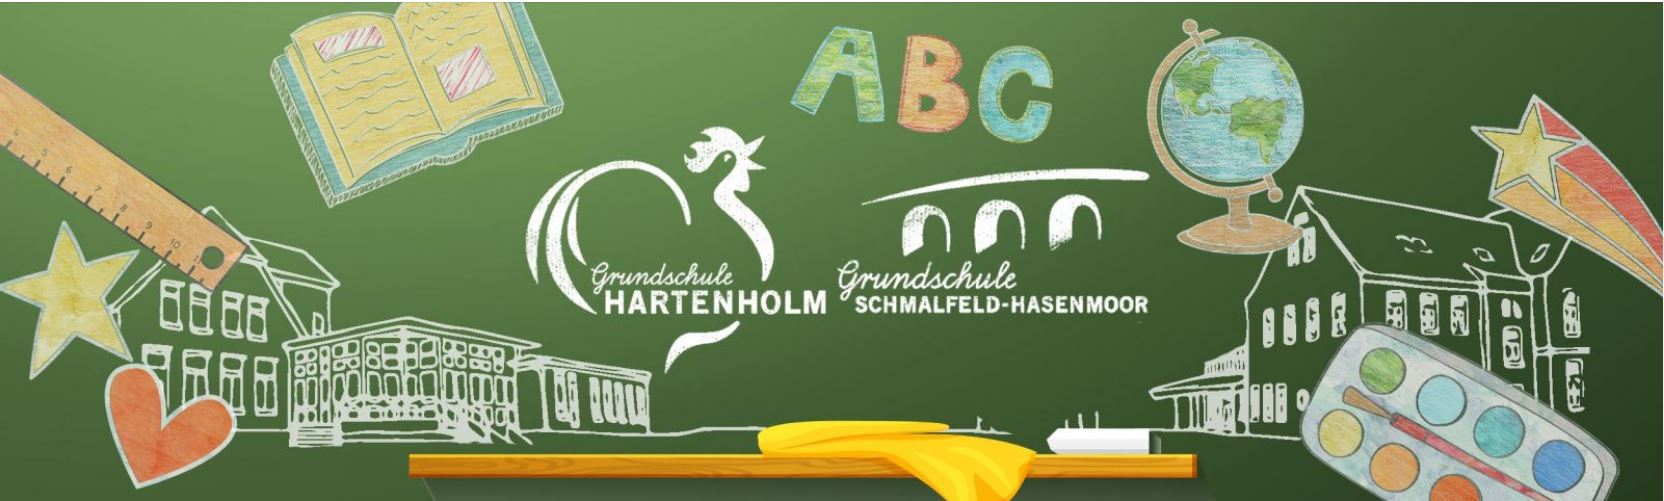 Grundschule Schmalfeld und Hartenholm